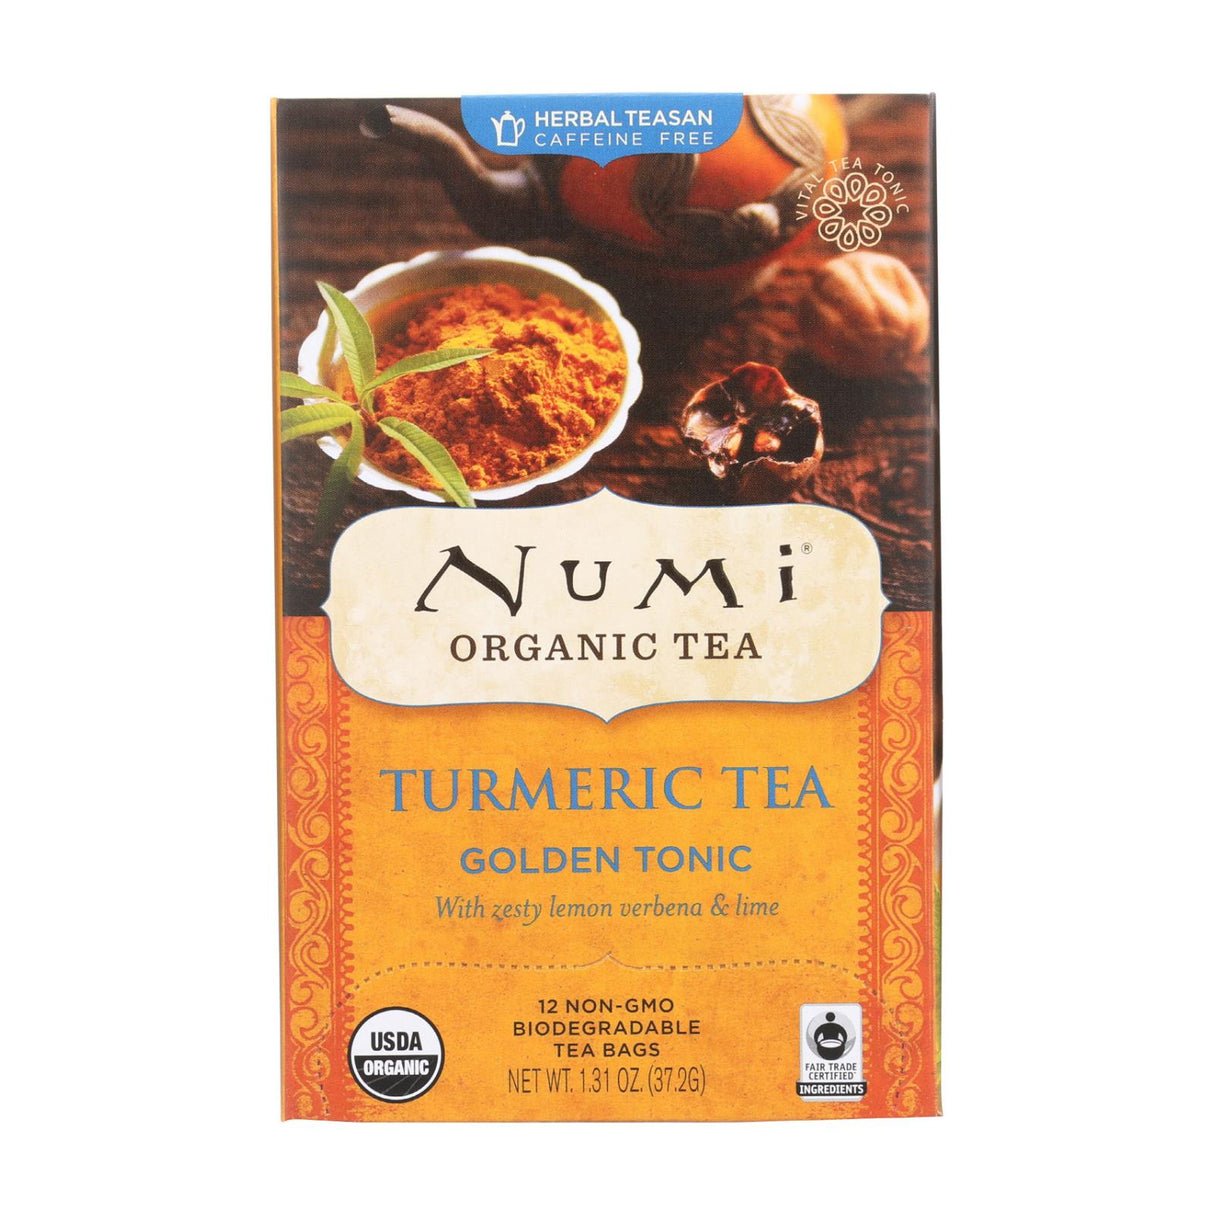 Numi Organic Turmeric Golden Tonic Tea, Pack of 6 x 12 Tea Bags - Cozy Farm 